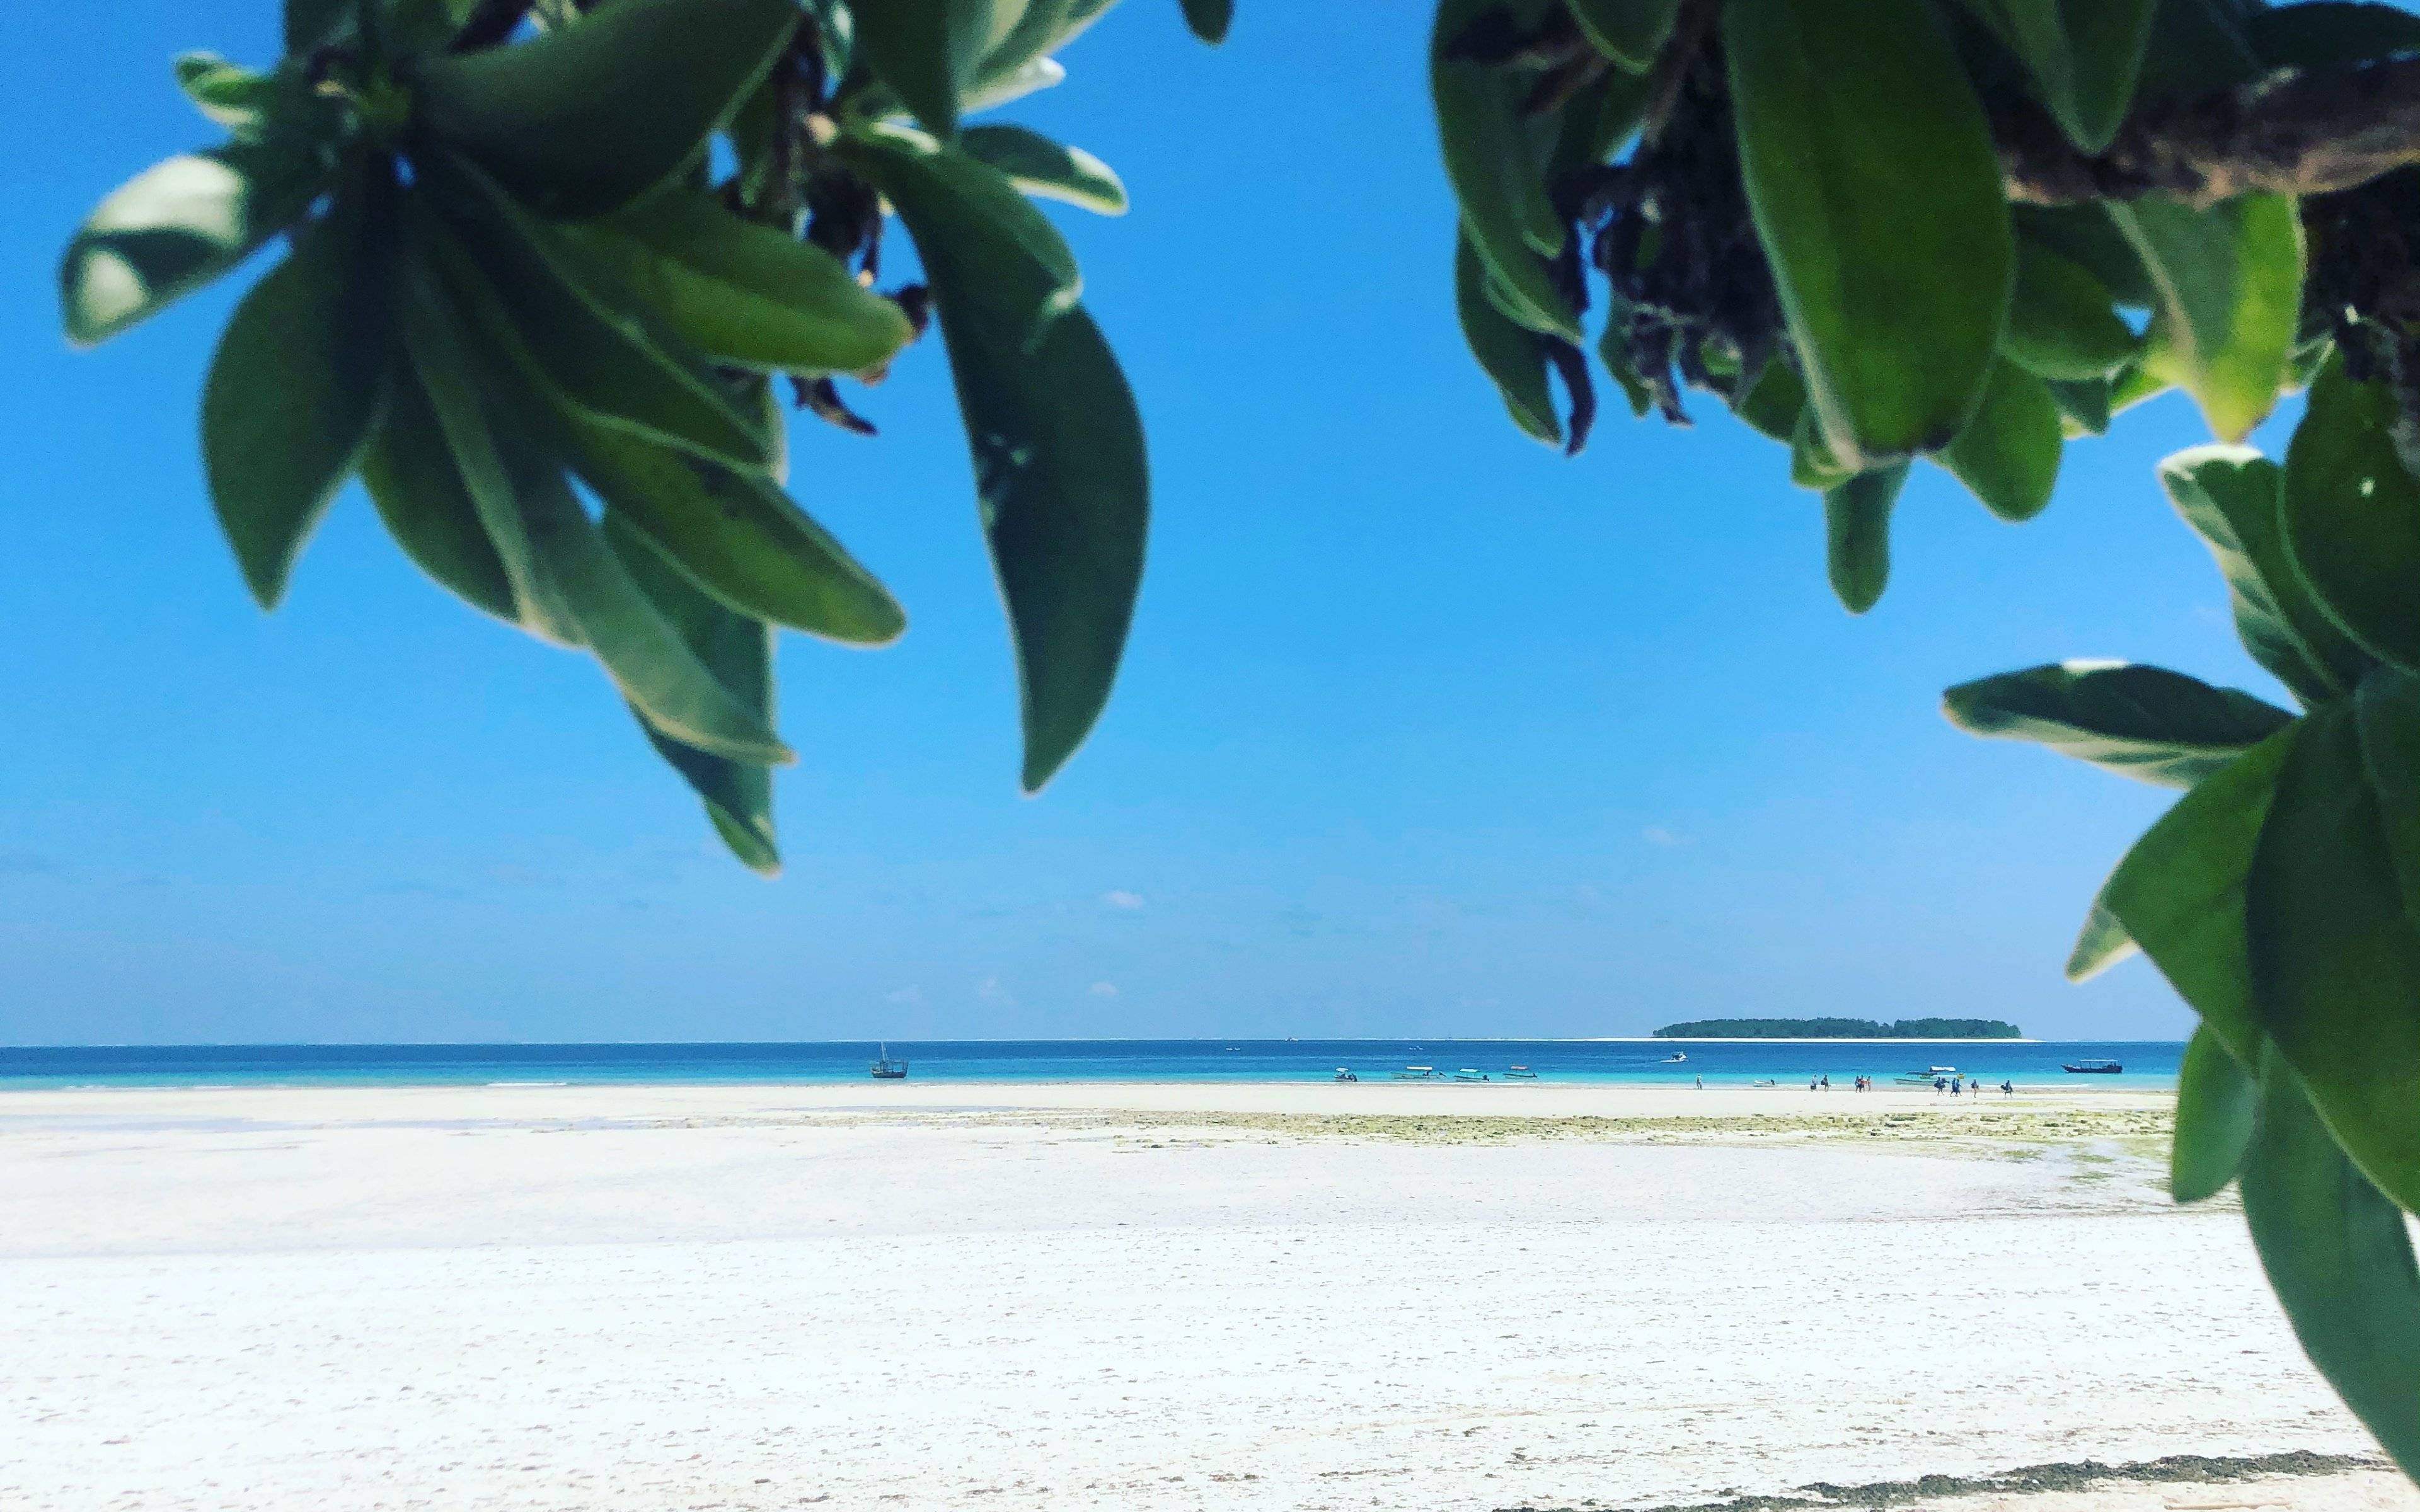 Benvenuti sull'Isola delle spezie: Zanzibar!